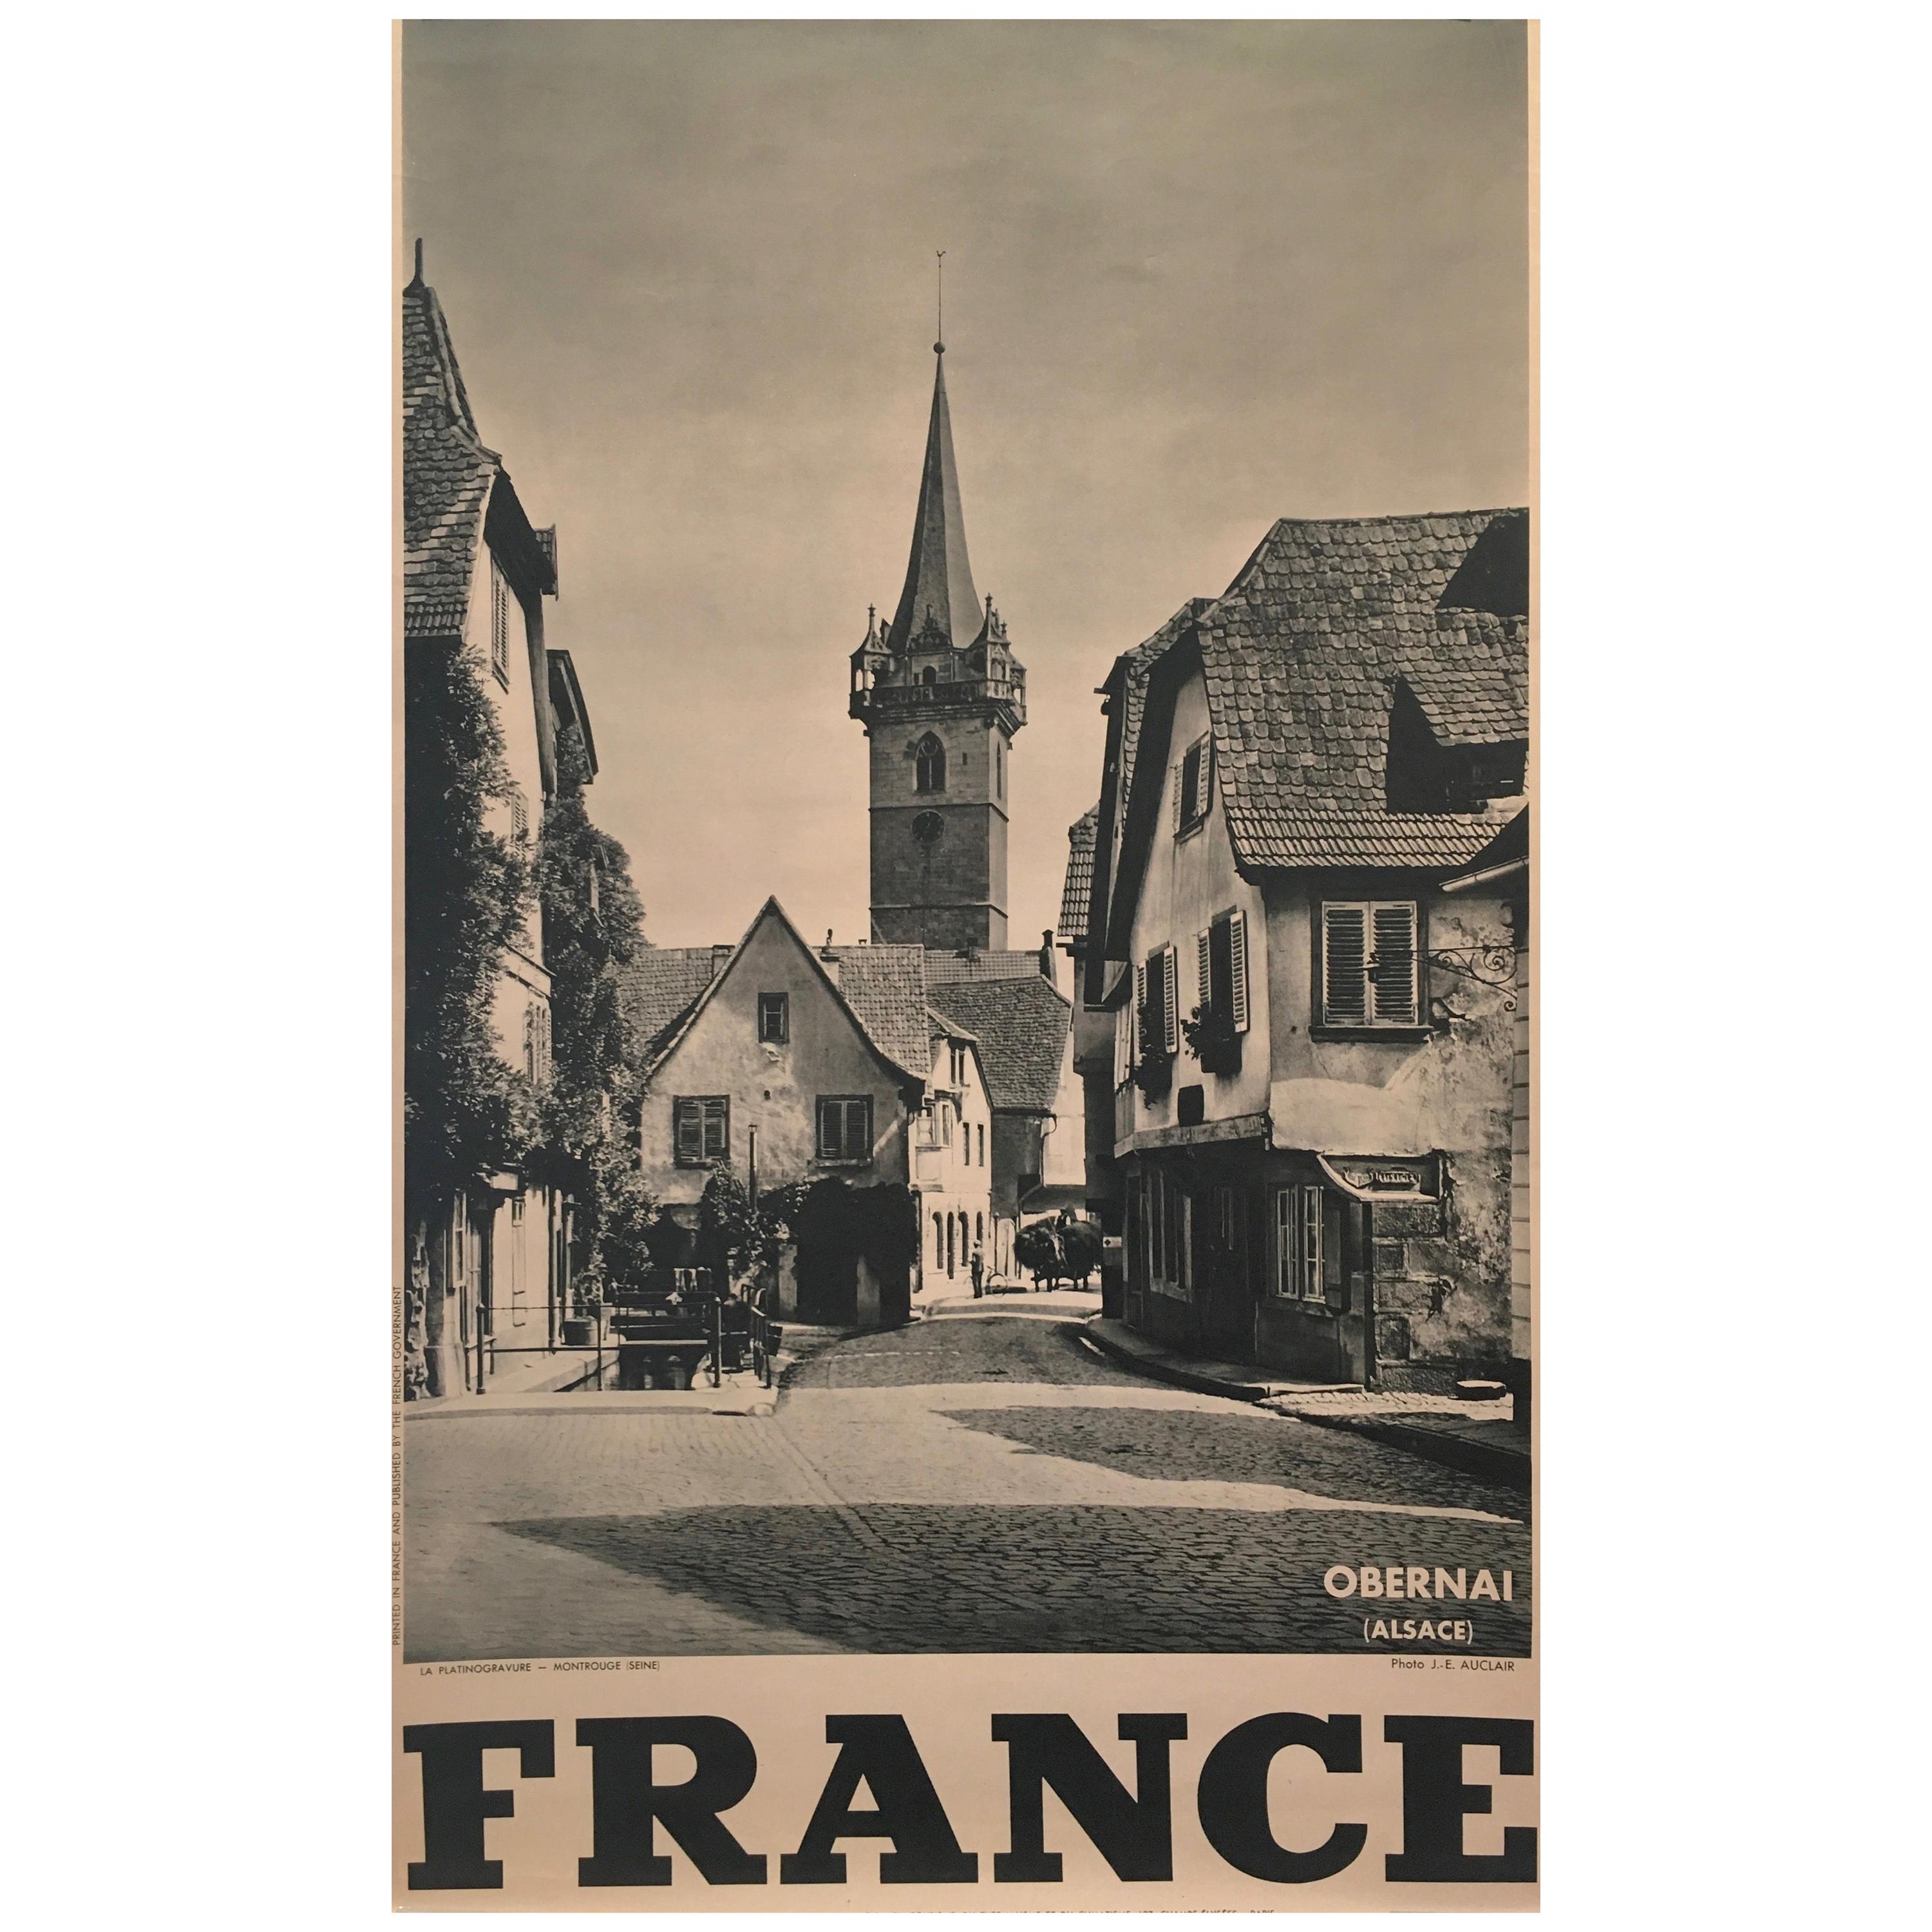 Original 1950er Jahre Französisch Regierung Tourismus Plakat 'Obernai'